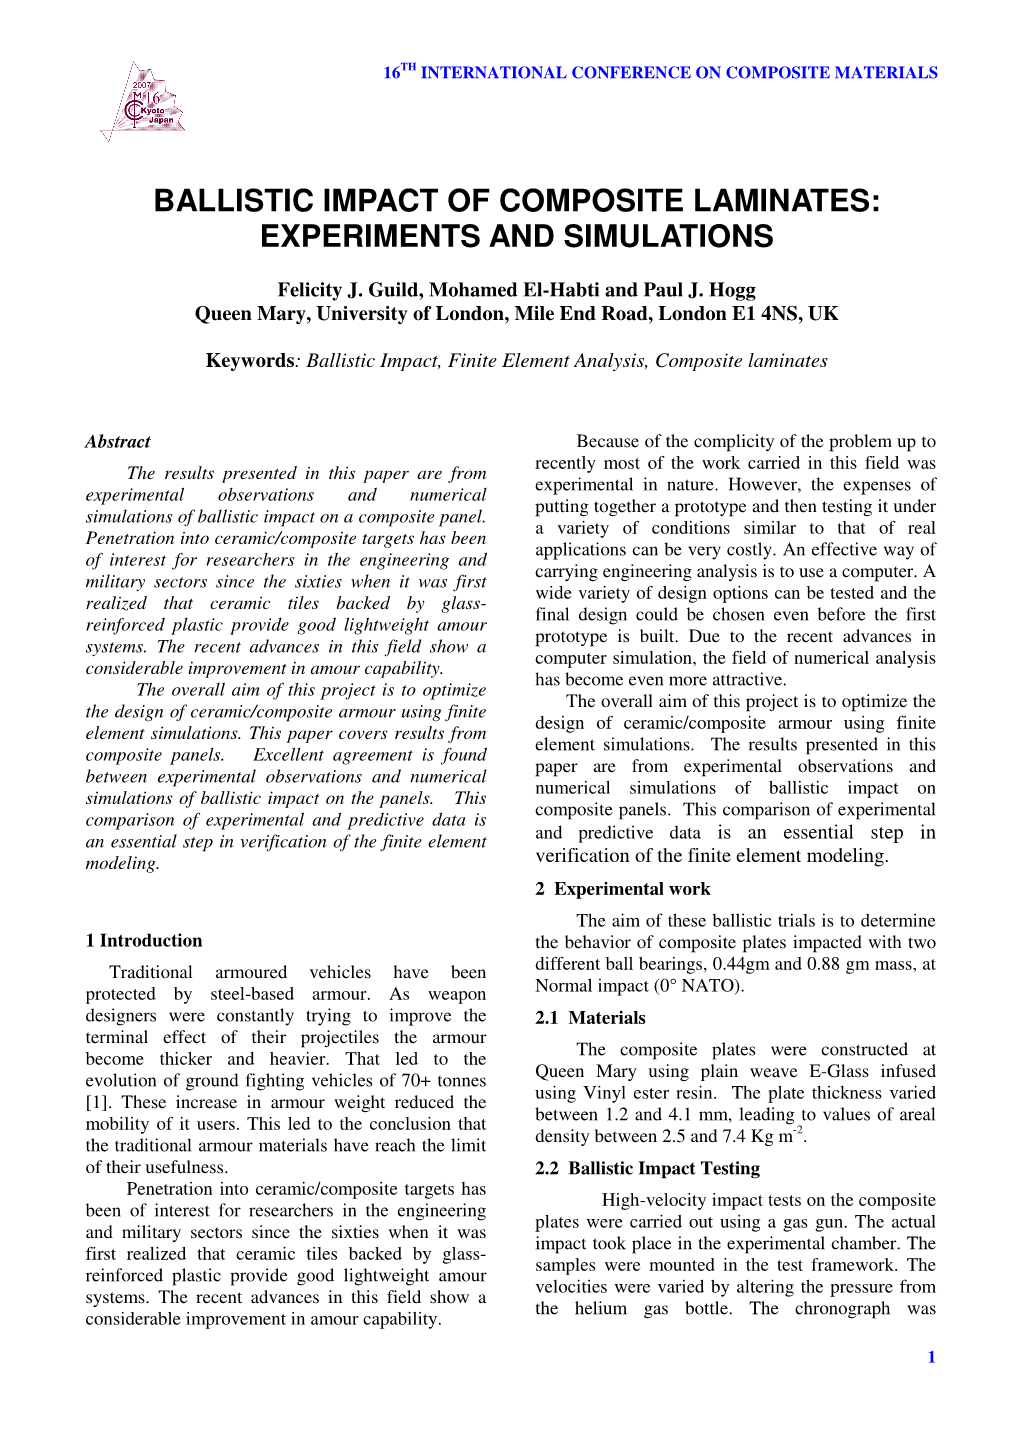 Ballistic Impact of Composite Laminates: Experiments and Simulations